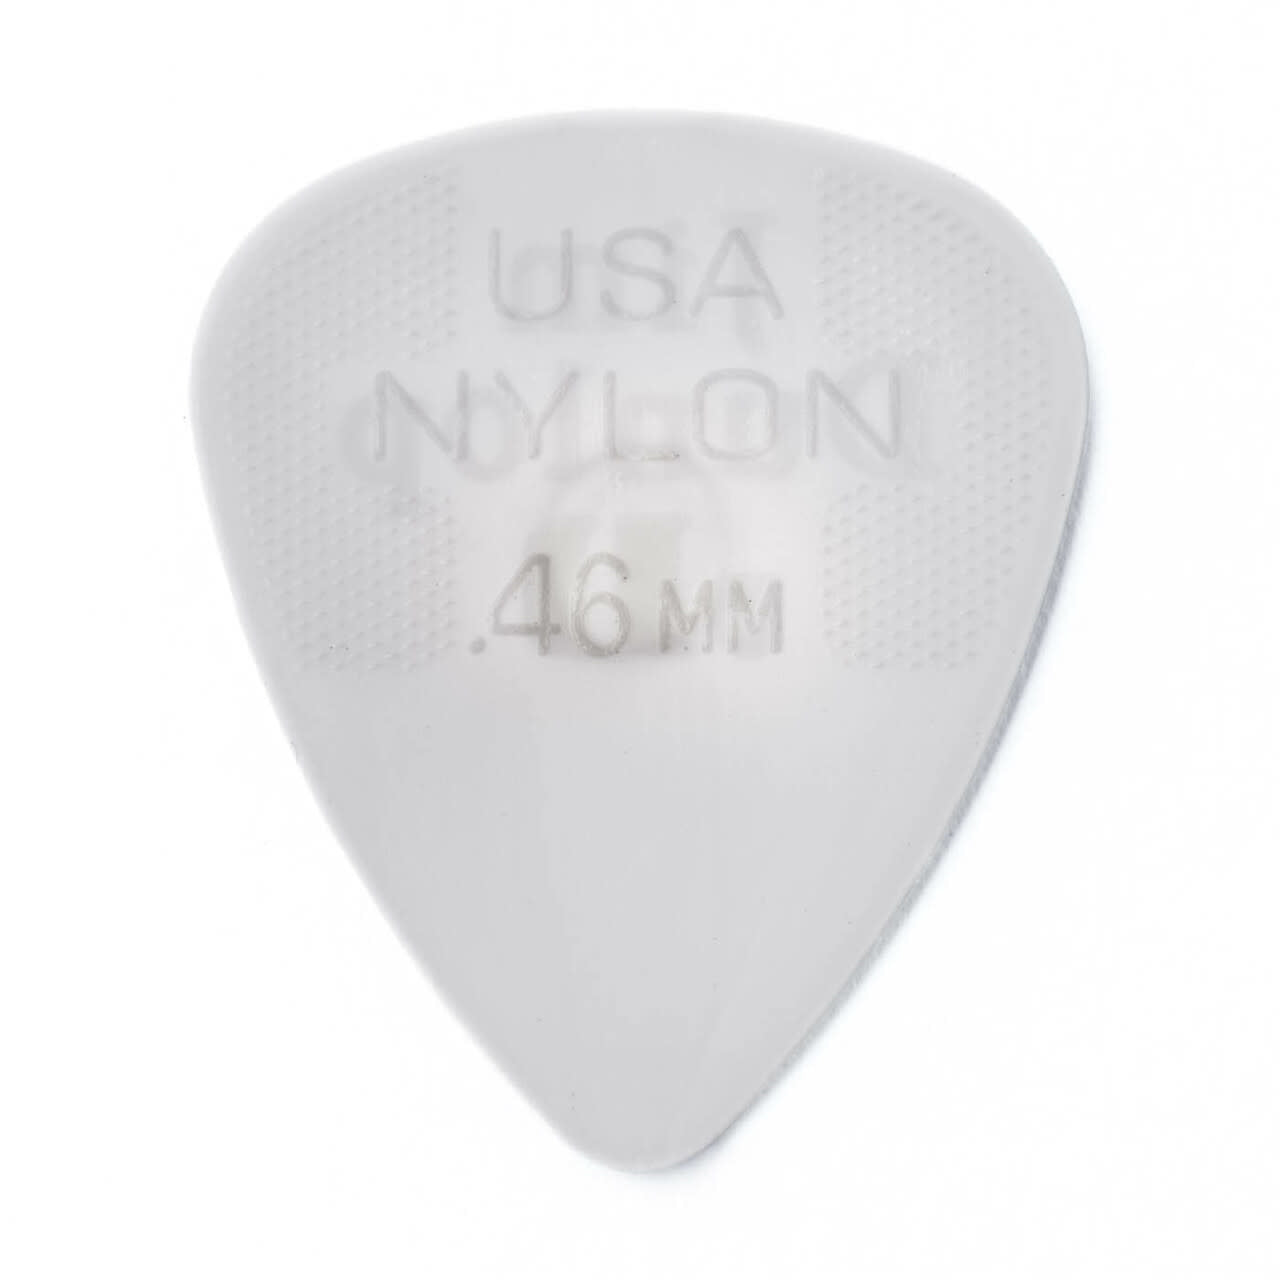 Dunlop Nylon Standard Pick .46mm 44-046 12 Pack